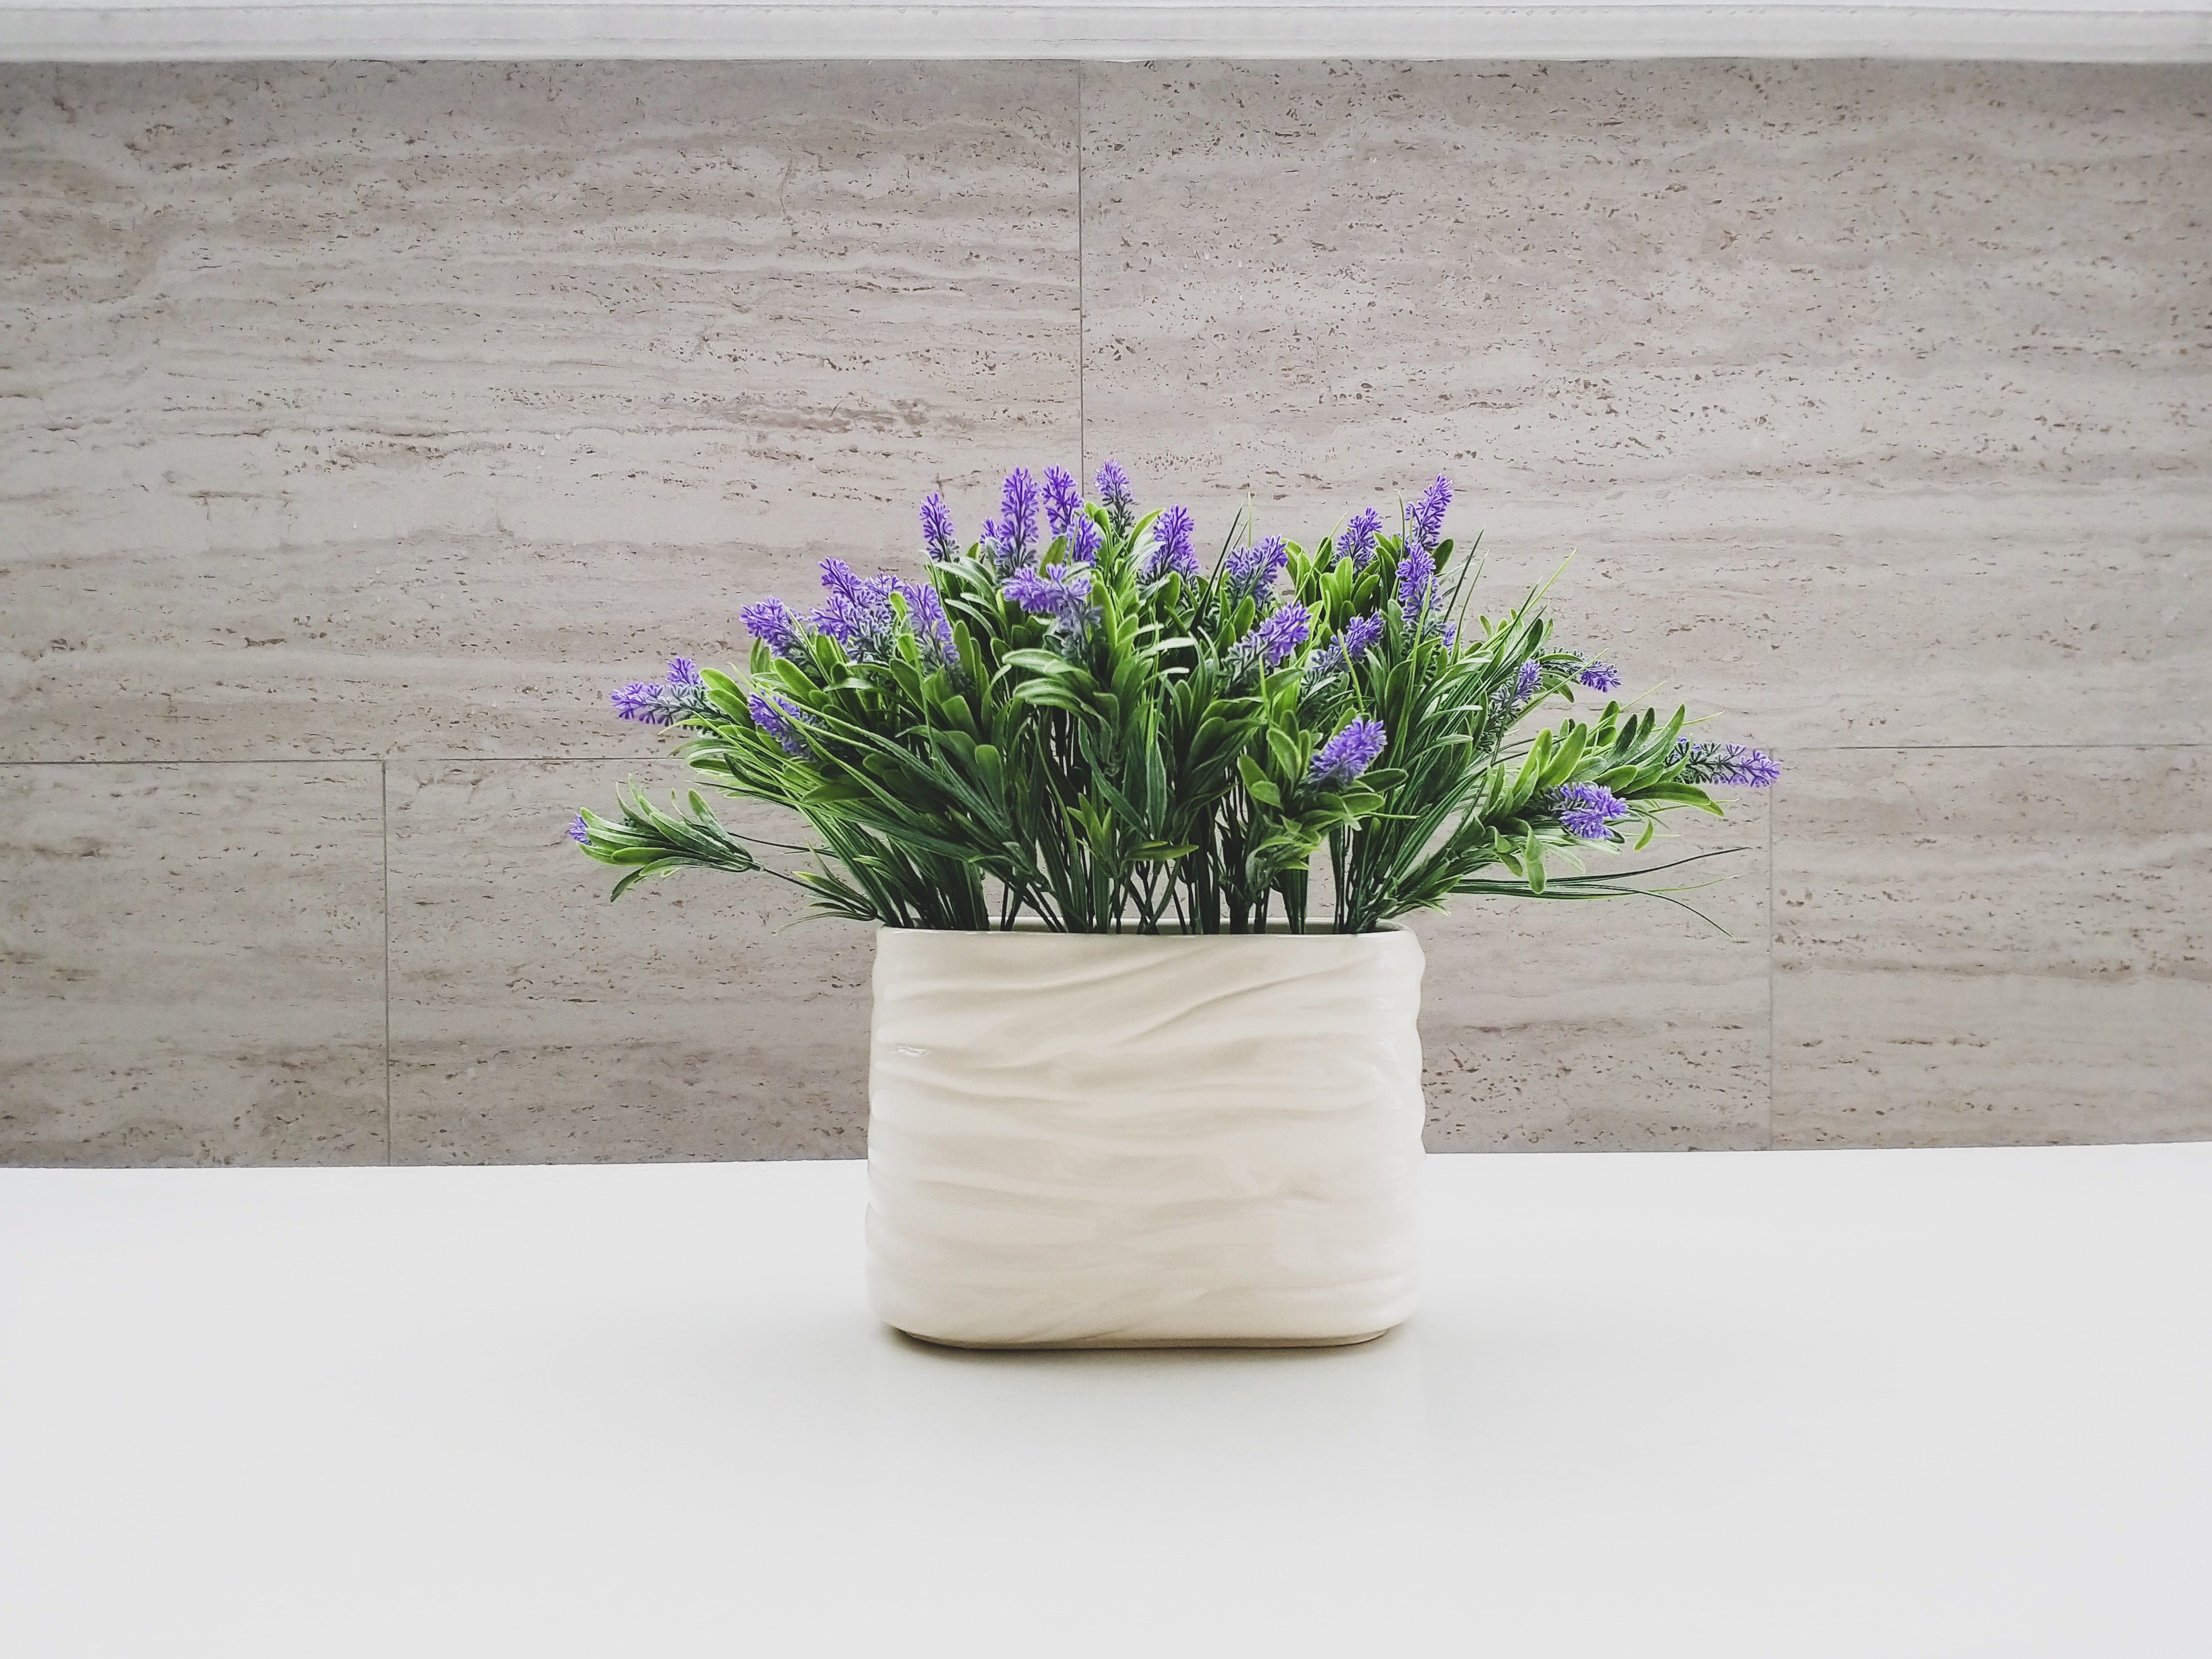 Plant in white pot | Unsplash 